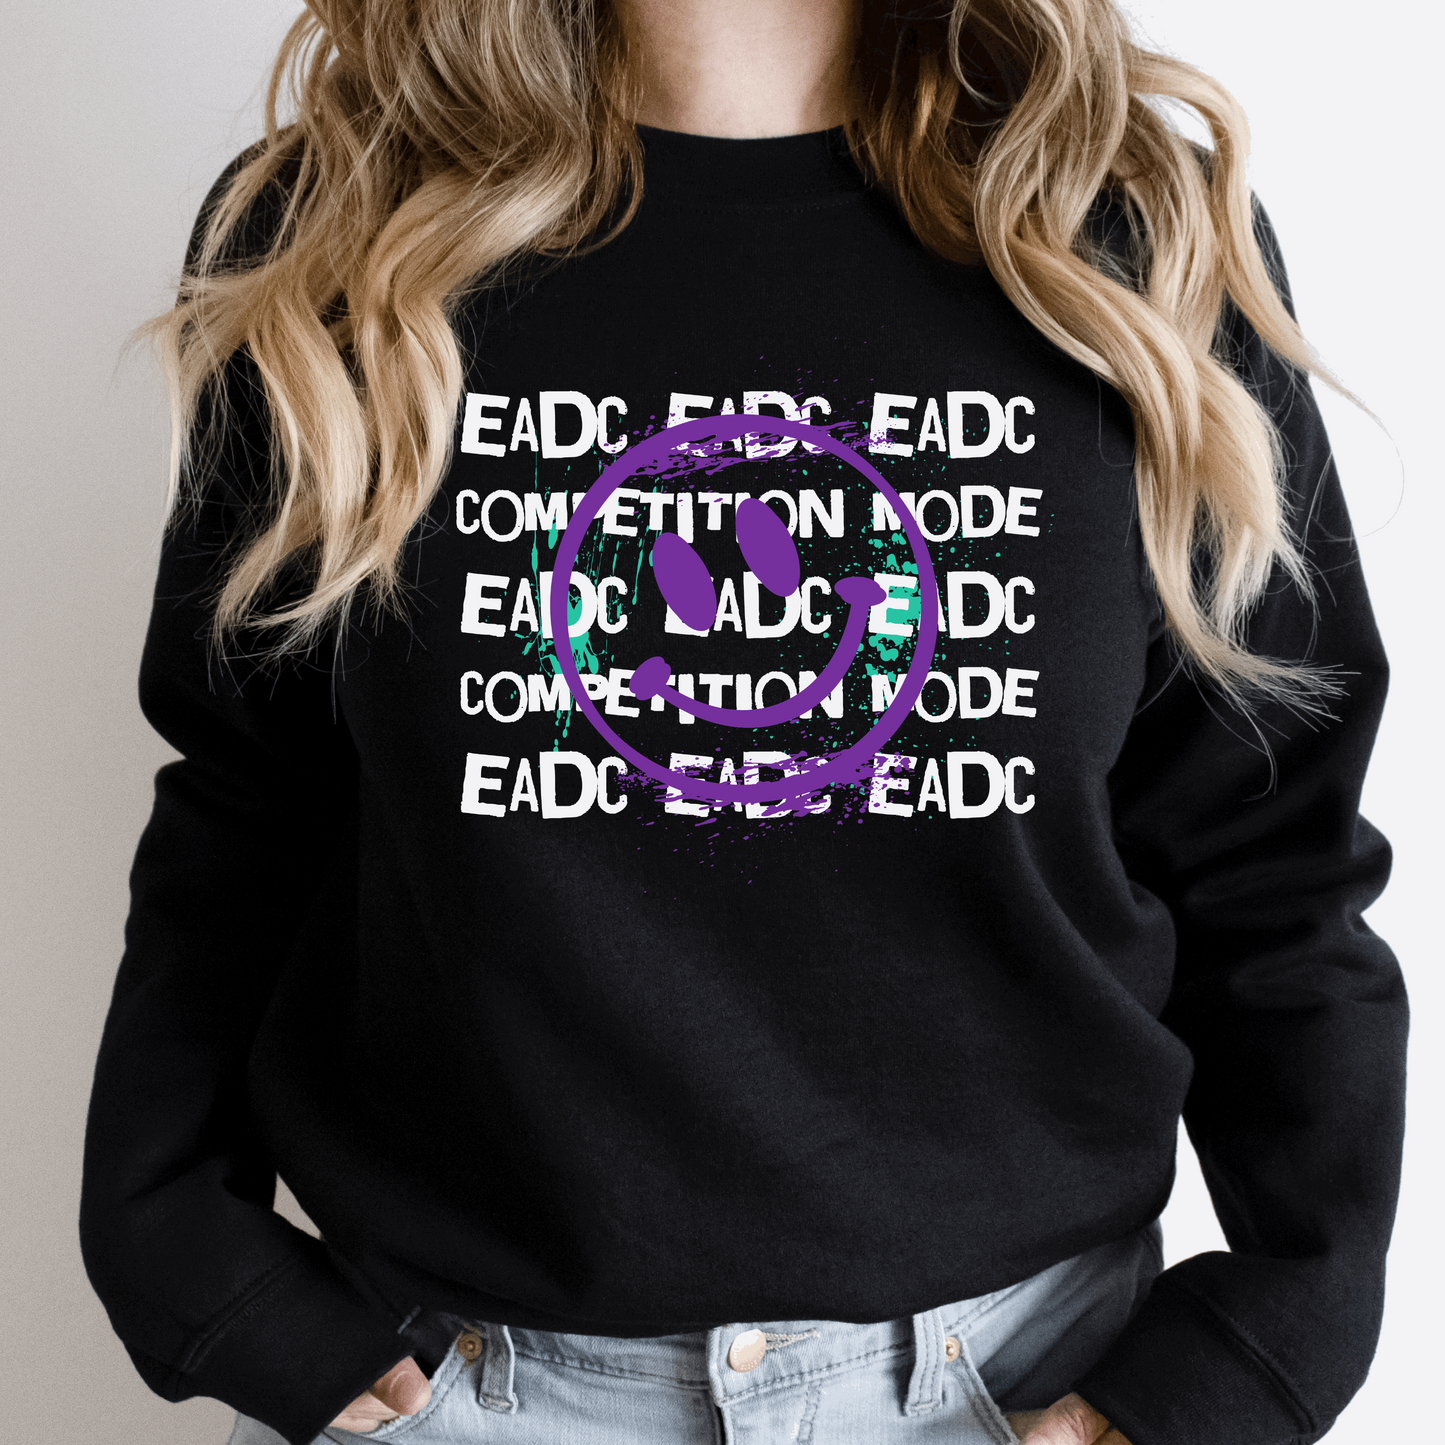 EADC Competition Mode Sweatshirt